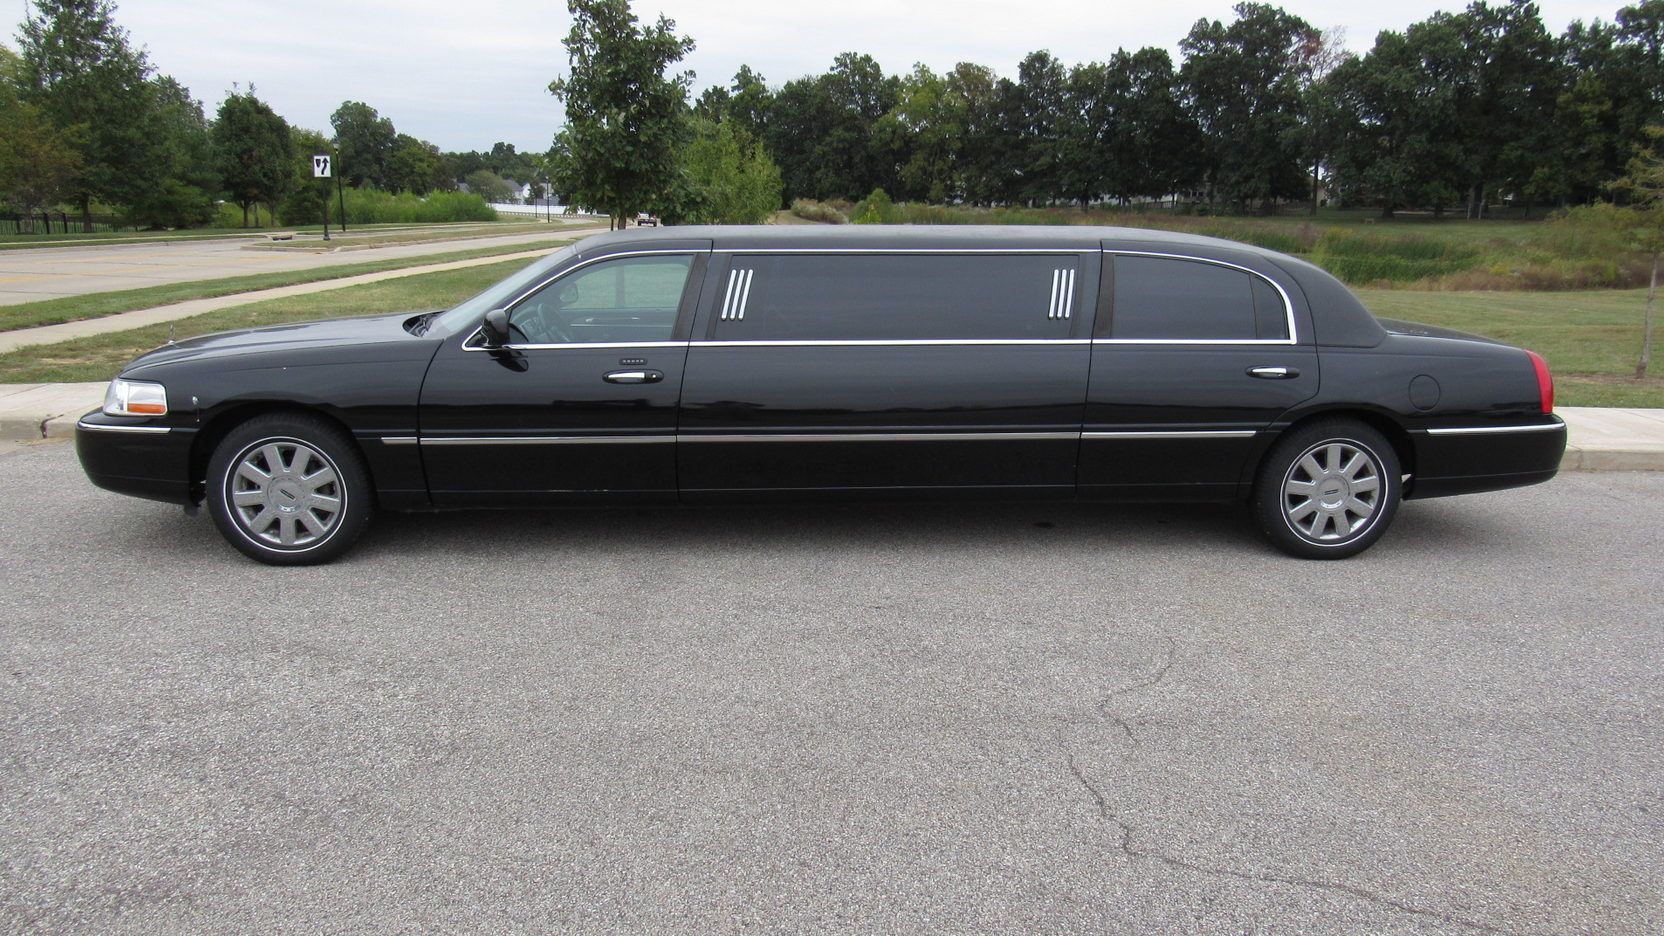 Black Lincoln Stretch Limousine